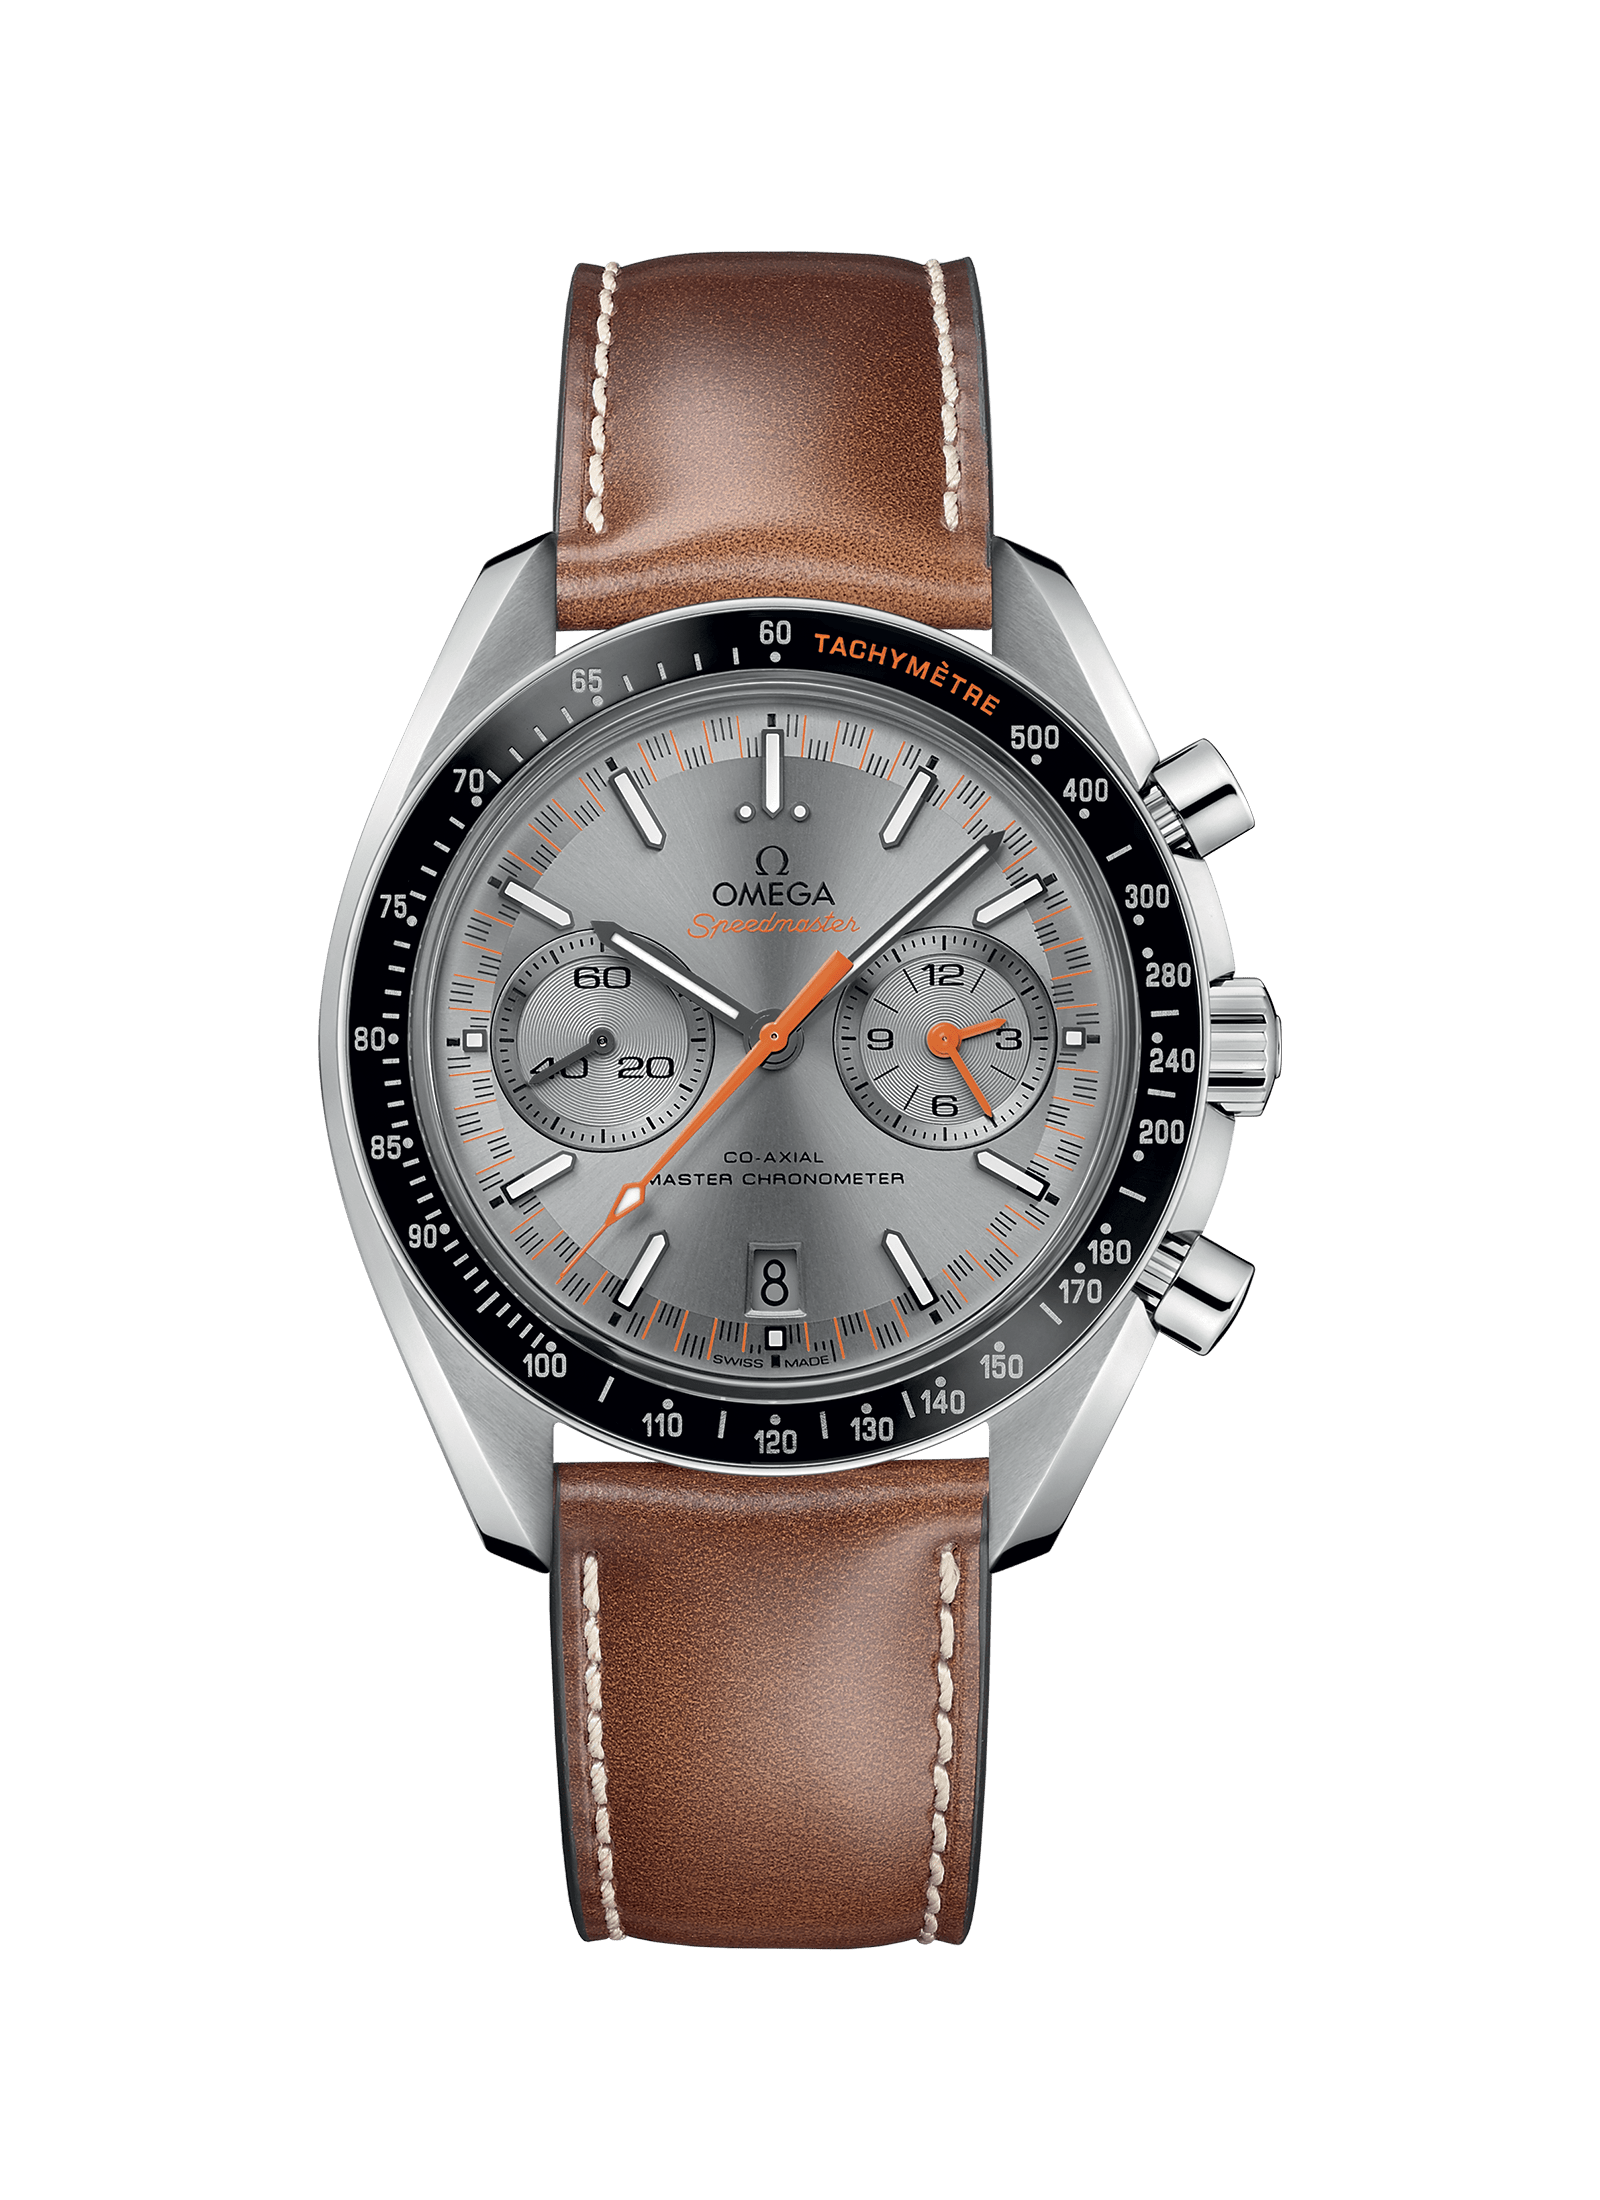 Racing Chronographe Co‑Axial Master Chronometer 44,25 mm